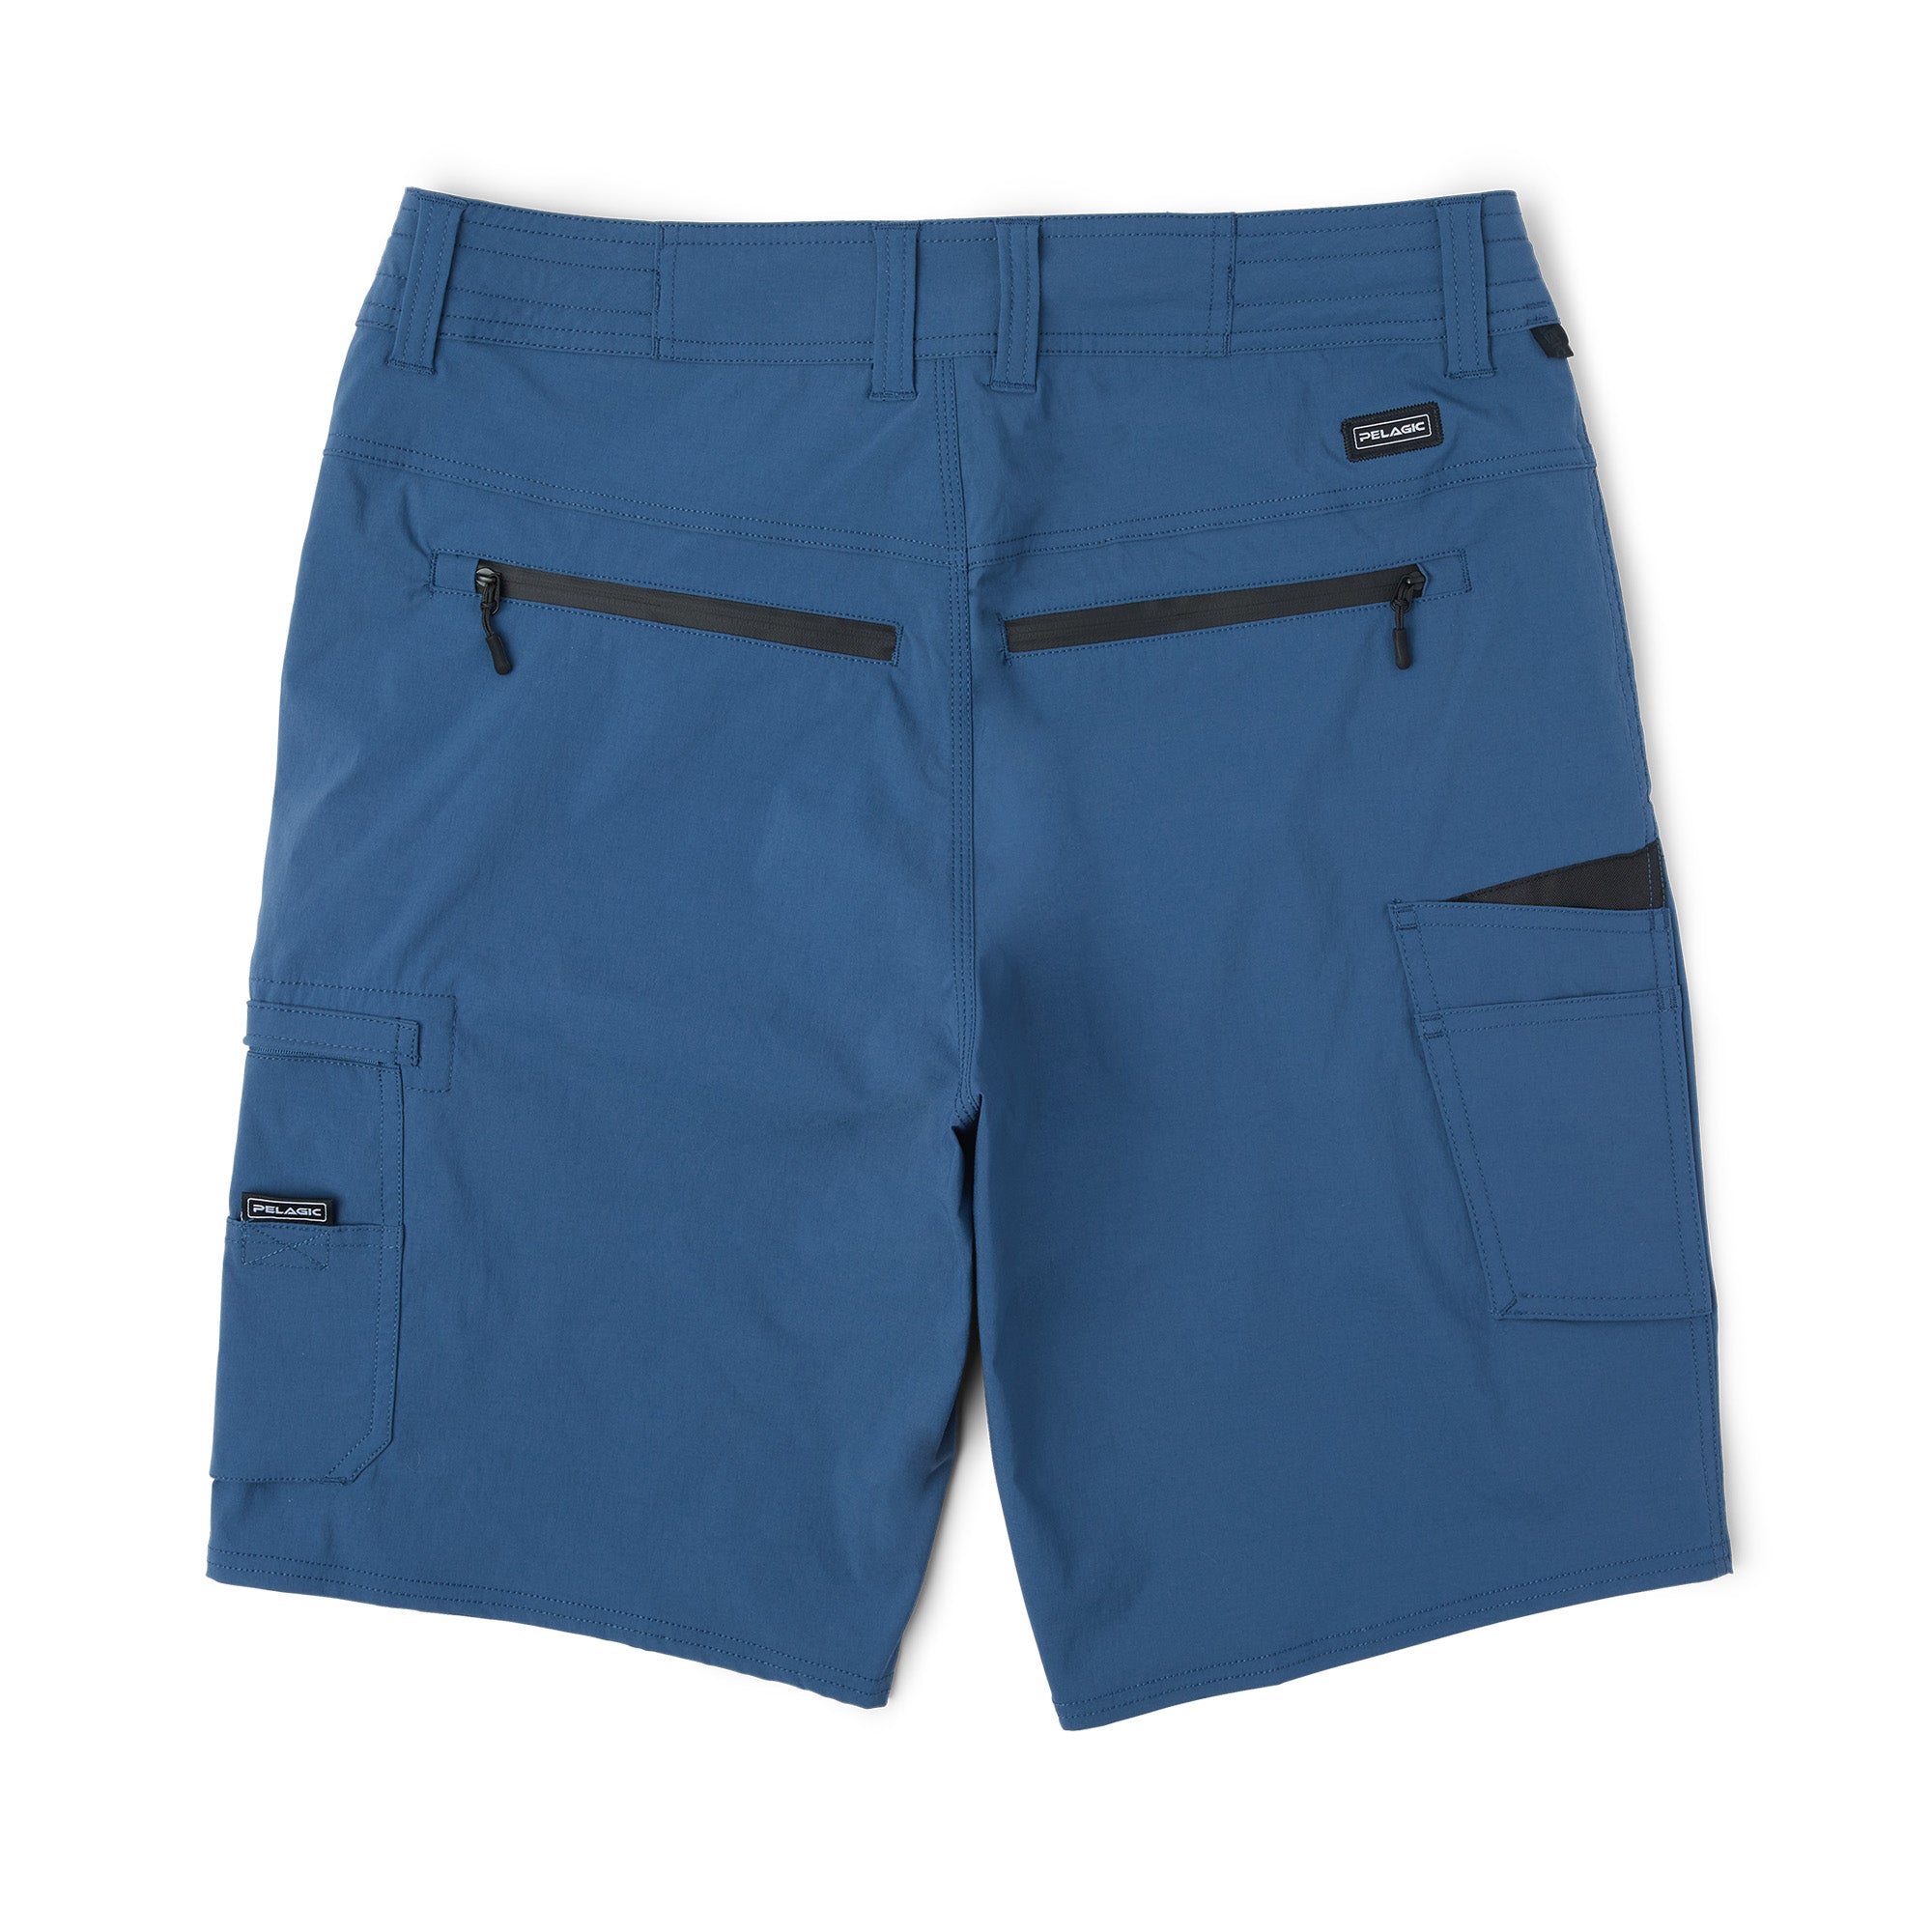 Pelagic Traverse Hybrid Shorts 20 34 / Smokey Blue